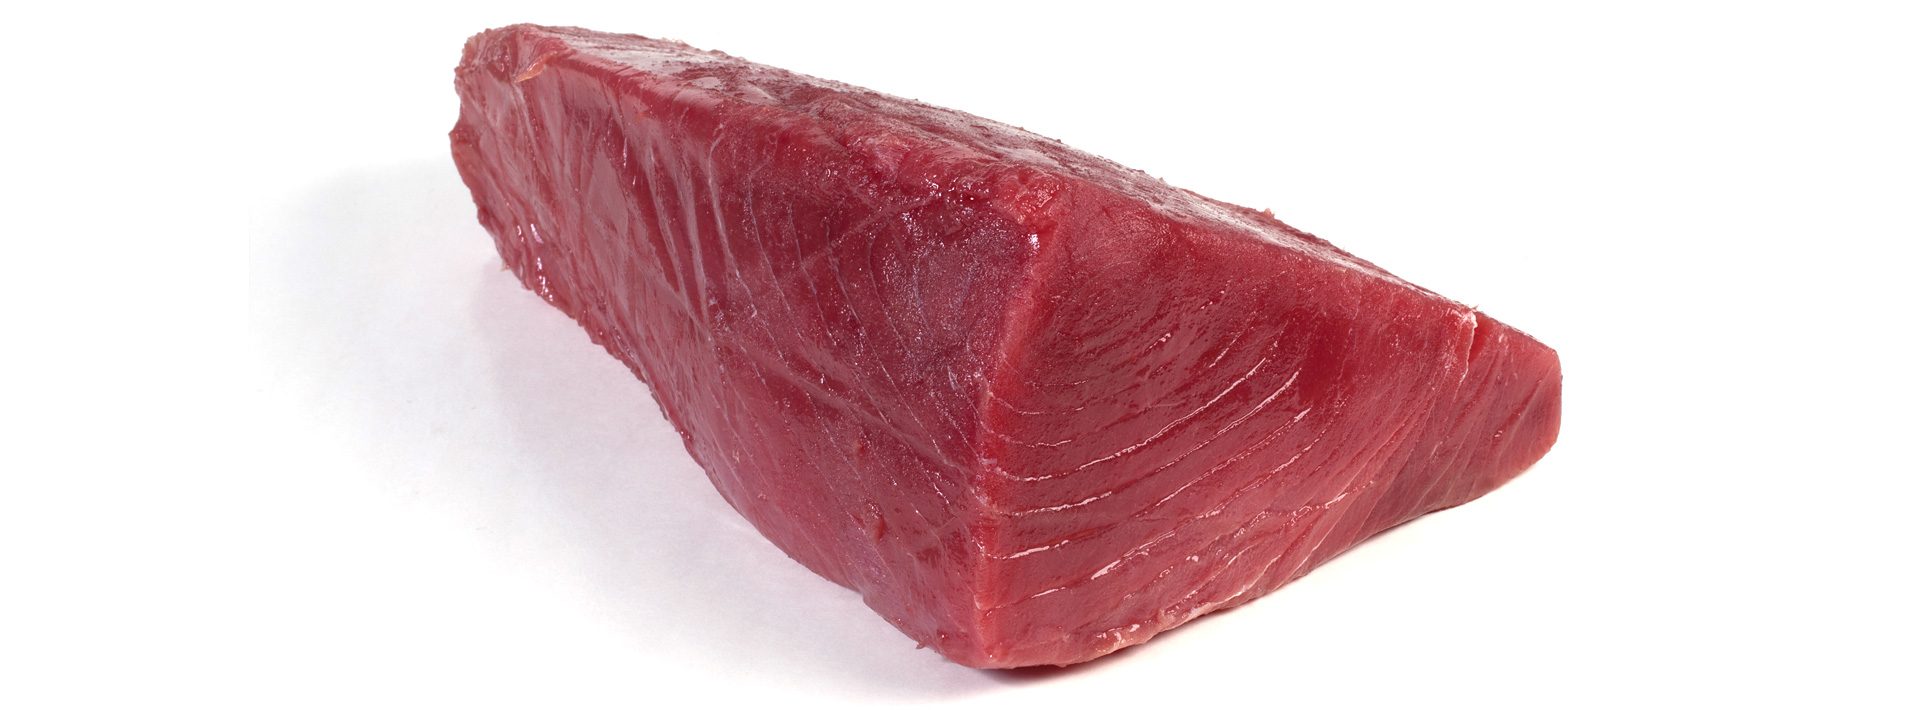 Geelvintonijn (Yellowfin) - Murko Seafood